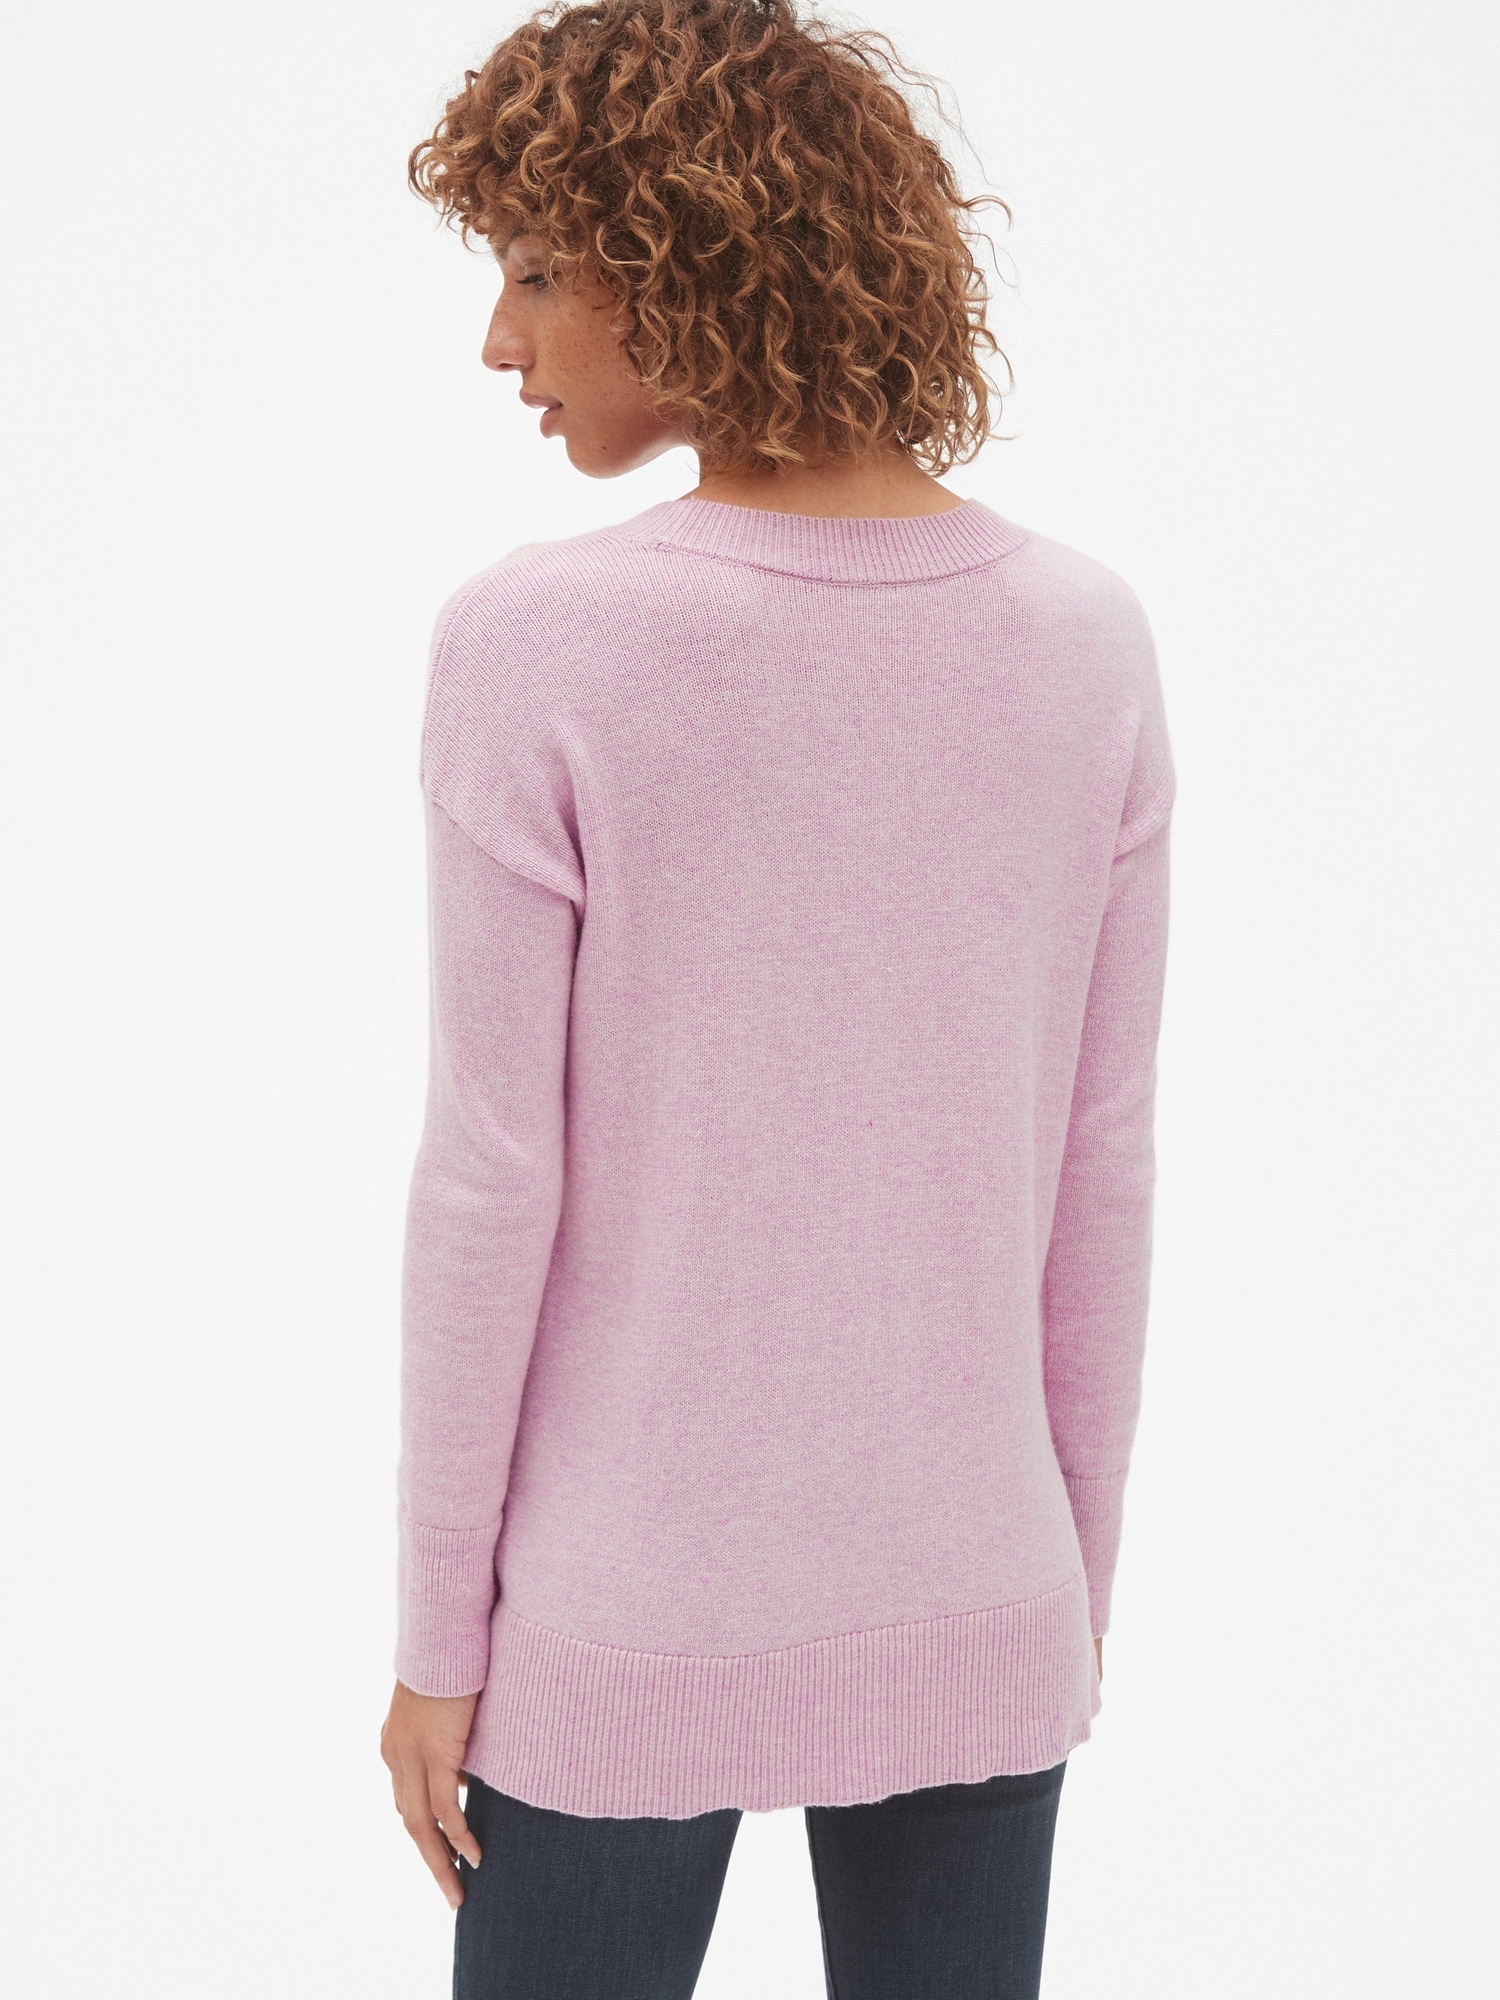 Crewneck Pullover Sweater Tunic | Gap